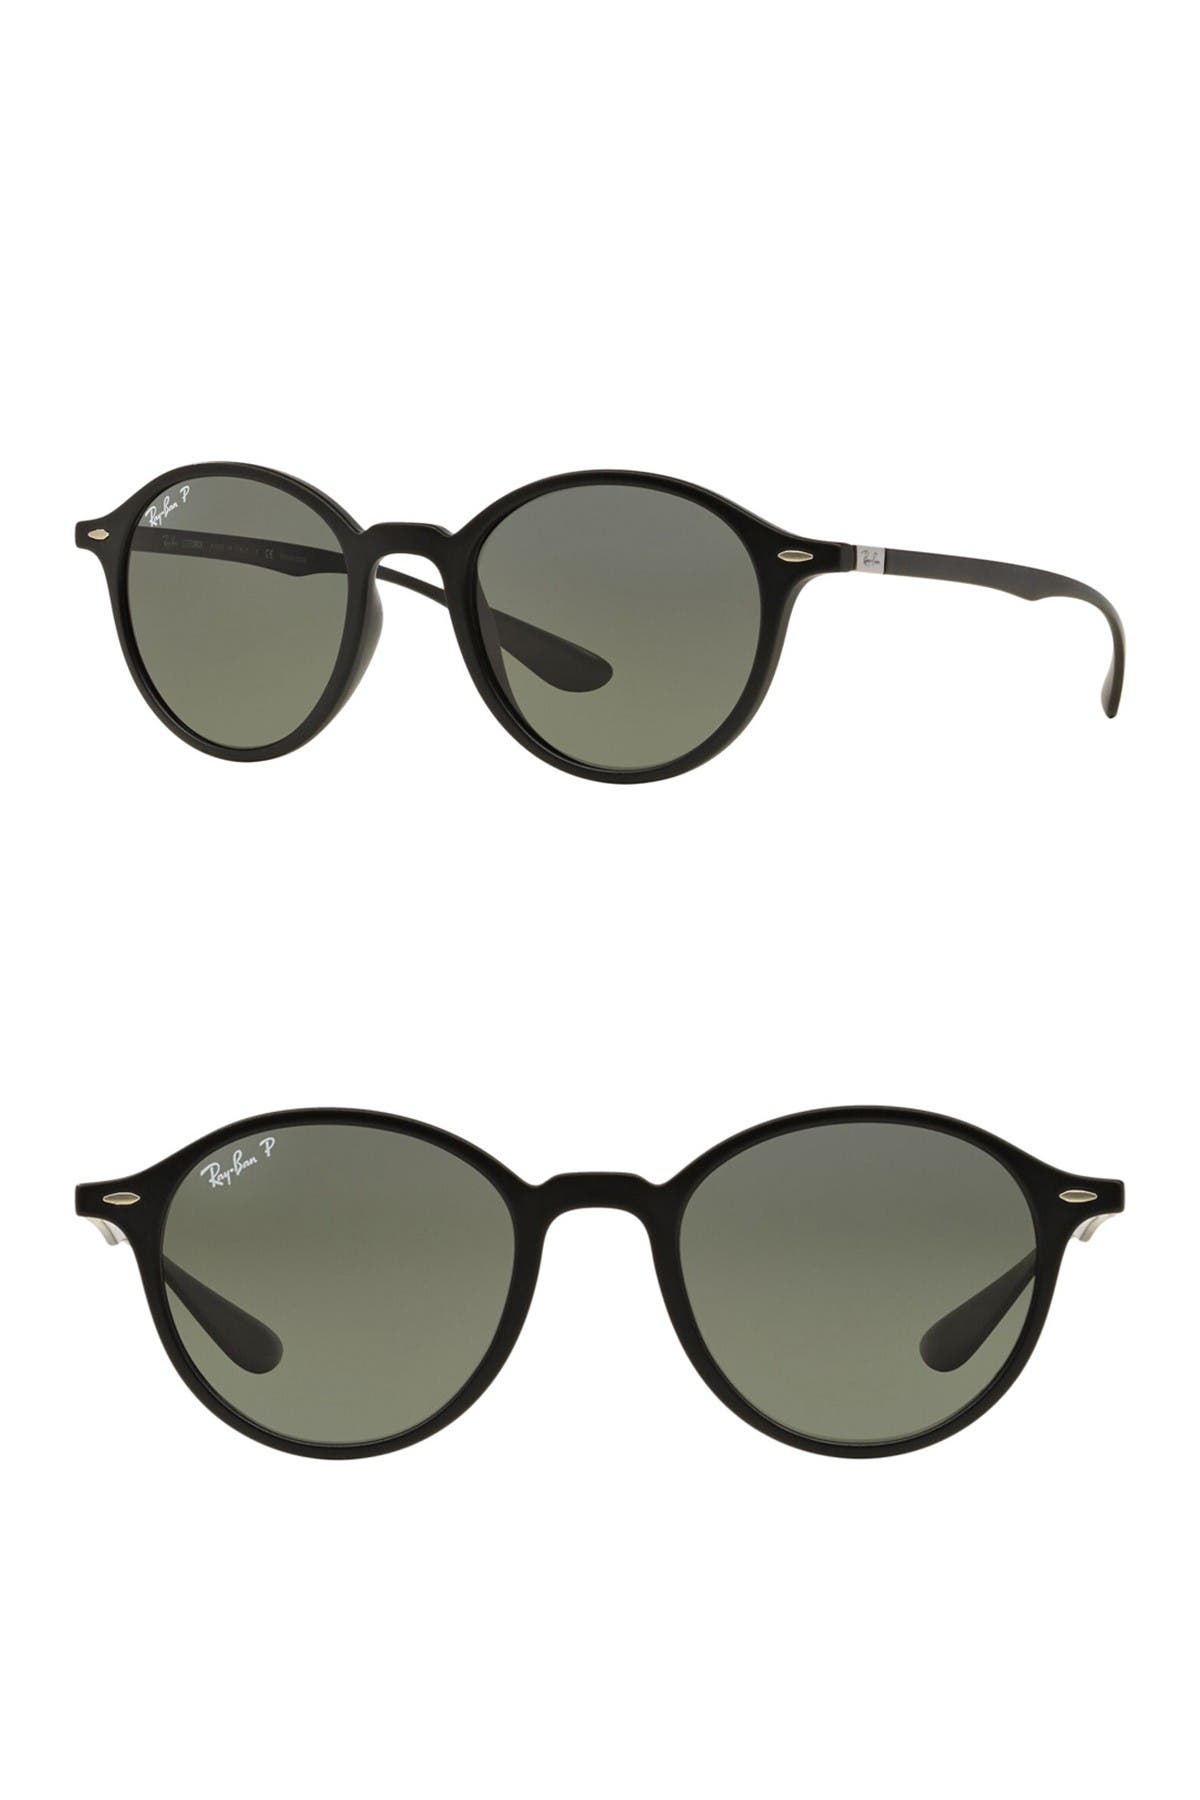 Ray Ban Tech Liteforce 50mm Polarized Round Sunglasses Hautelook